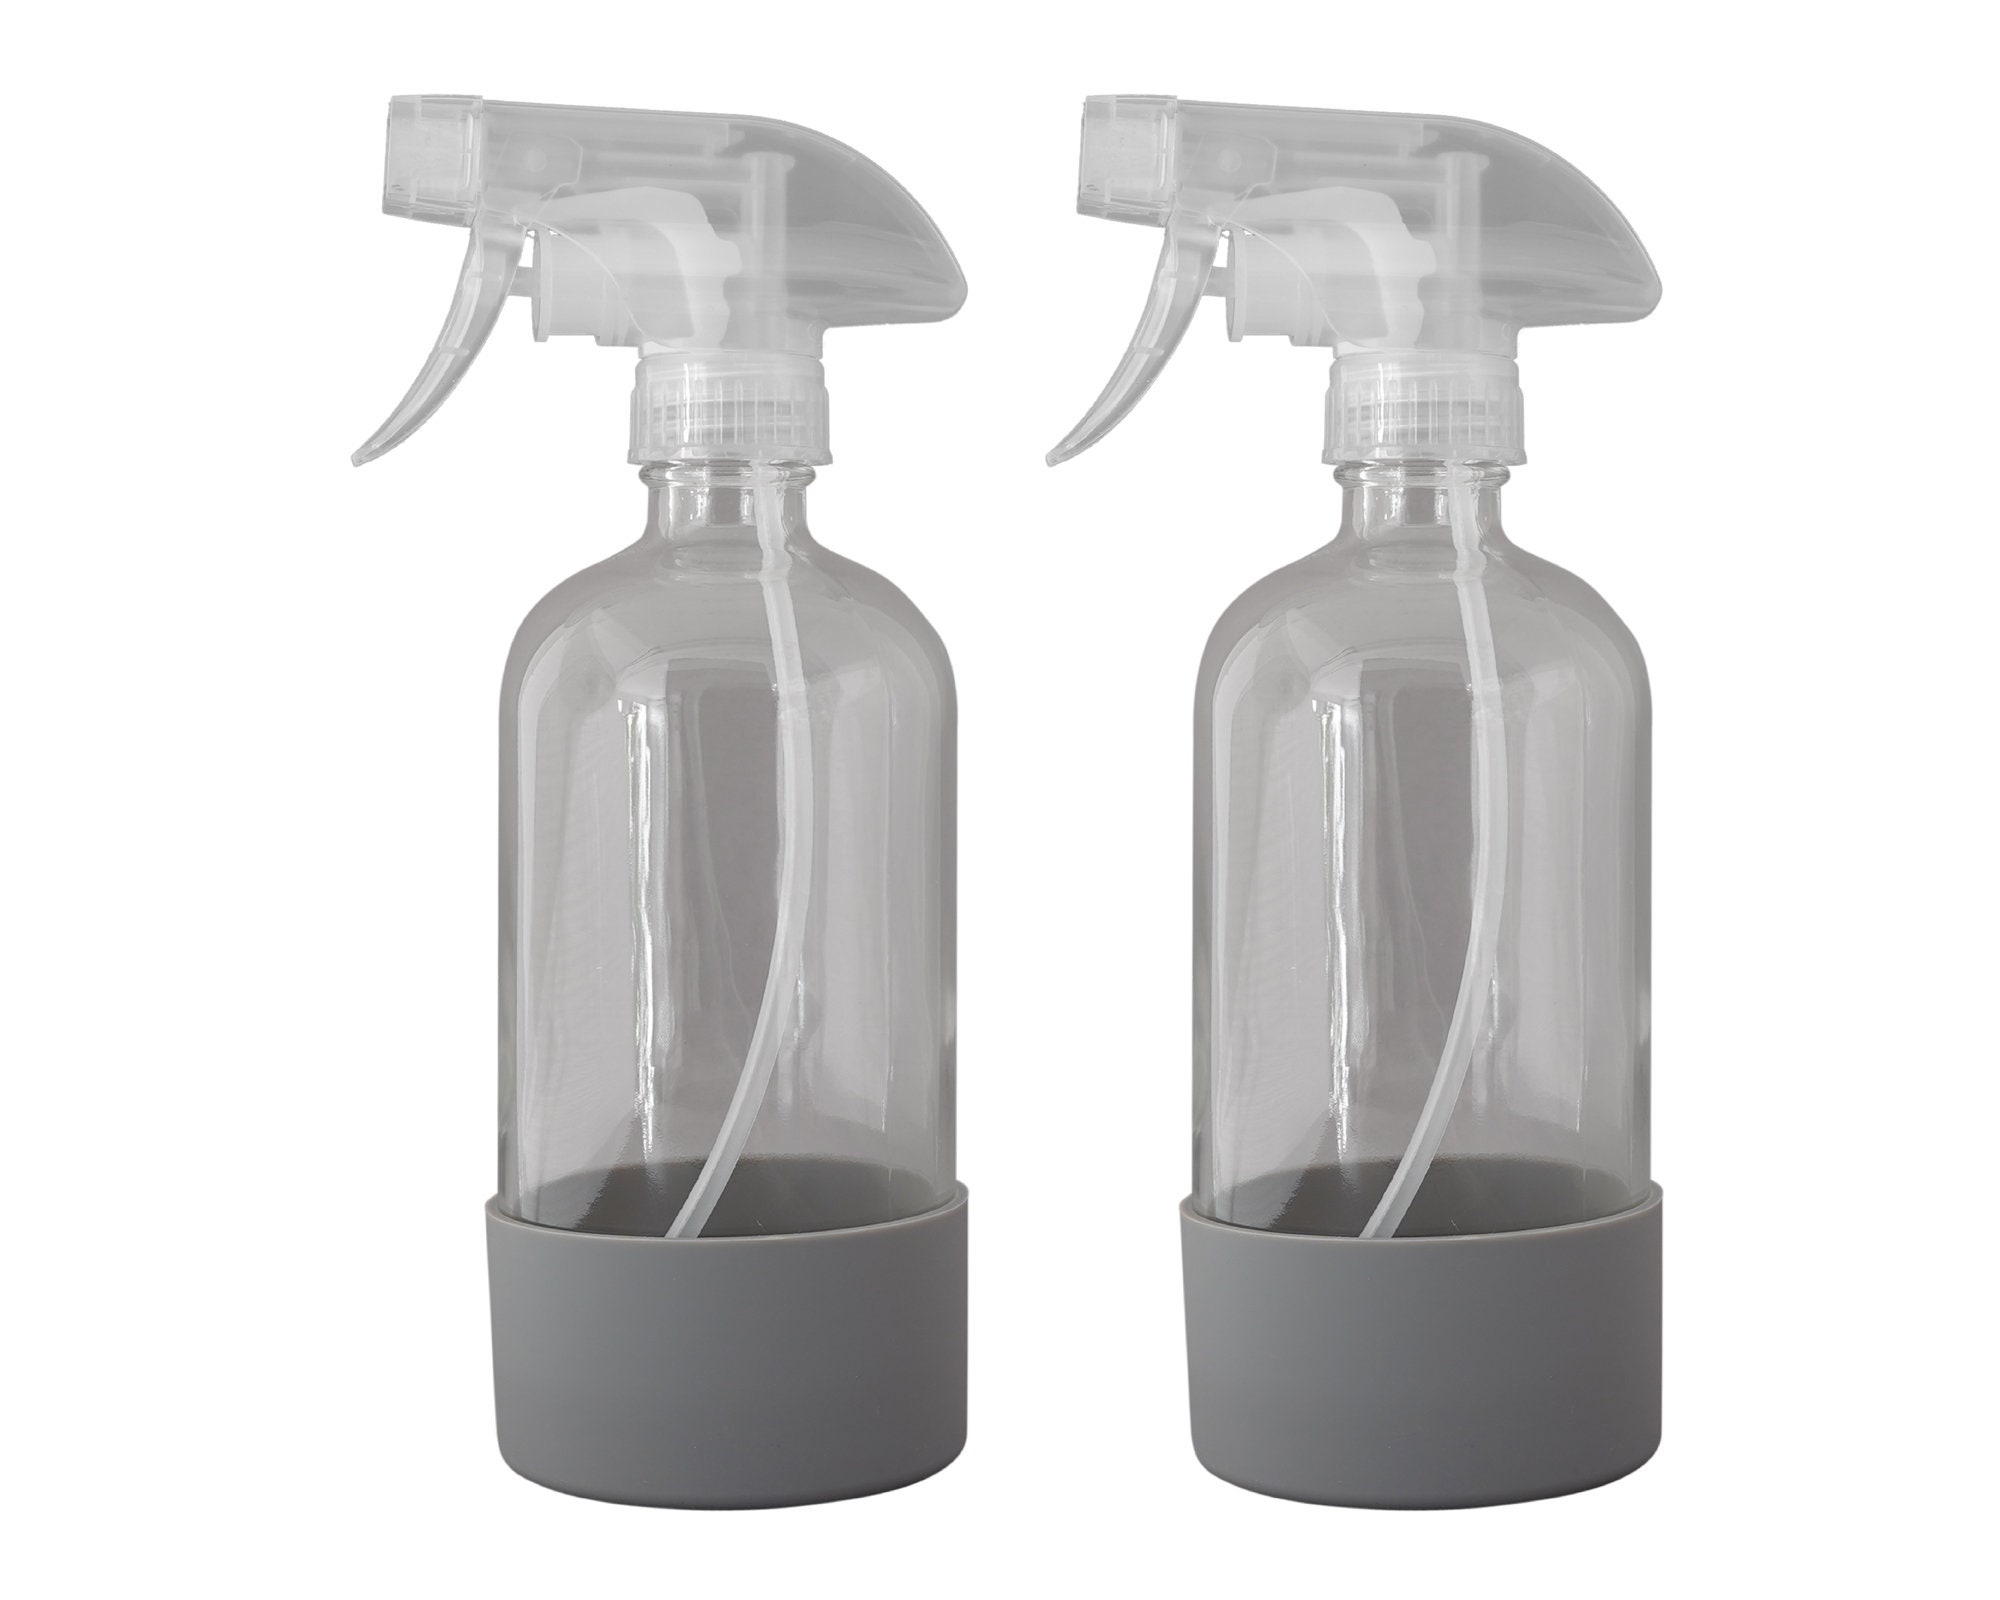 okpetroleum.com: Seafoam BBG-1 Bugs B Gone Multi-Use Cleaner 16oz Spray  Bottle (6 Pack)